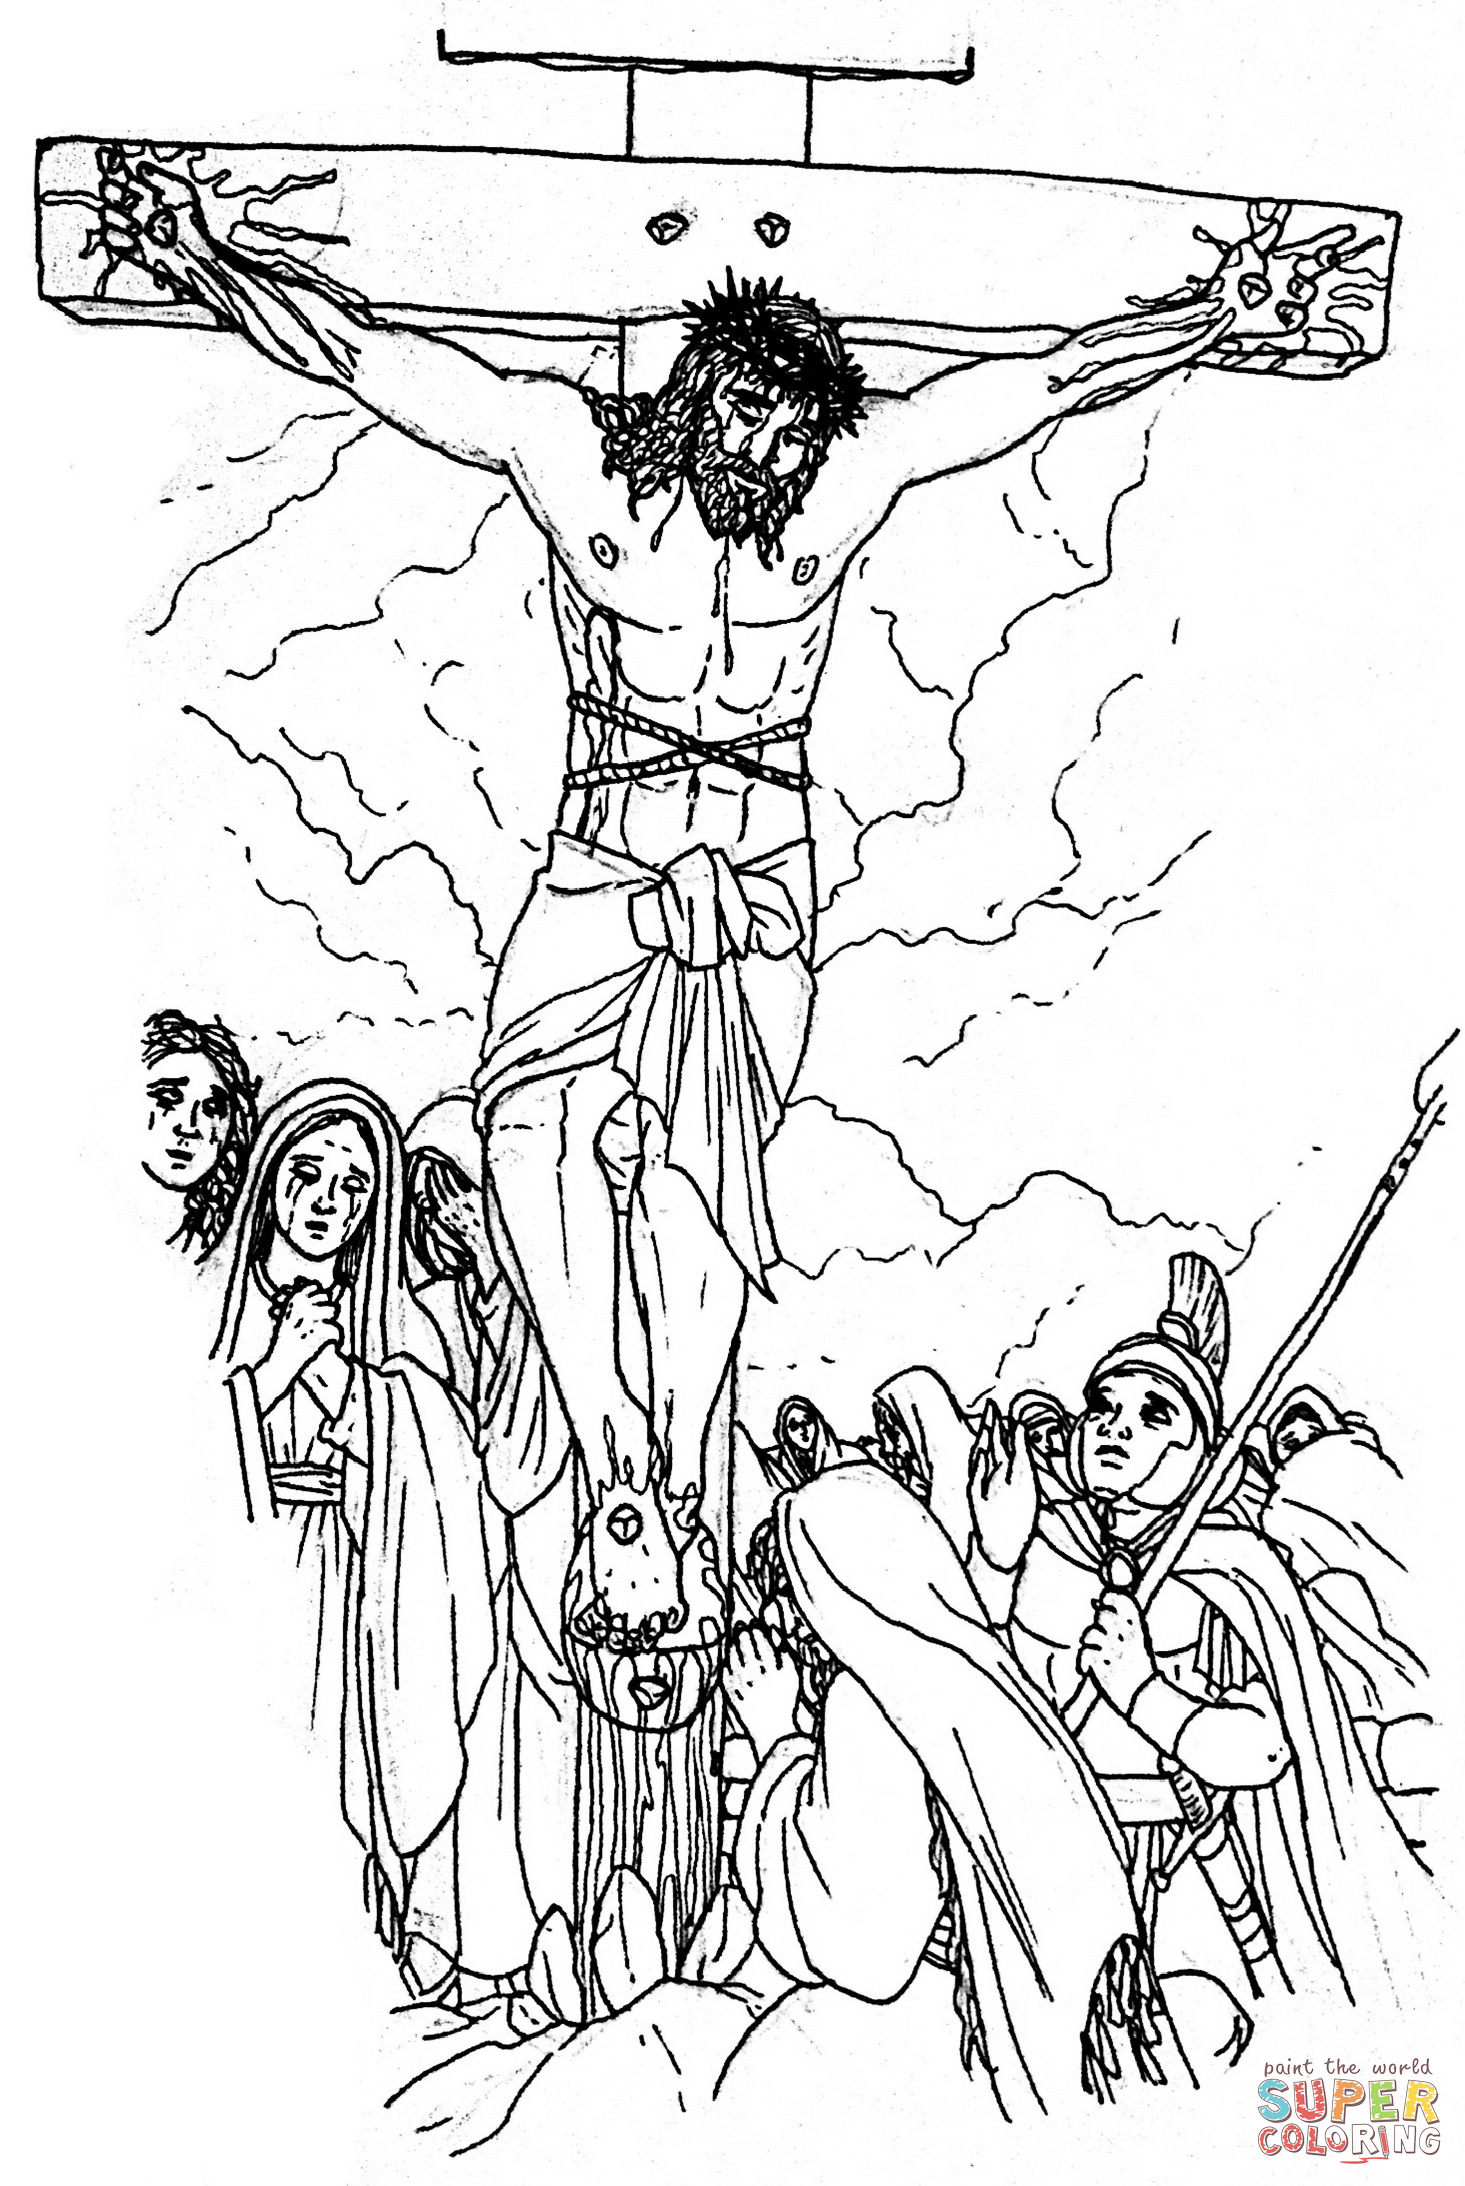 Dibujo de la crucifixiãn de cristo para colorear dibujos para colorear imprimir gratis